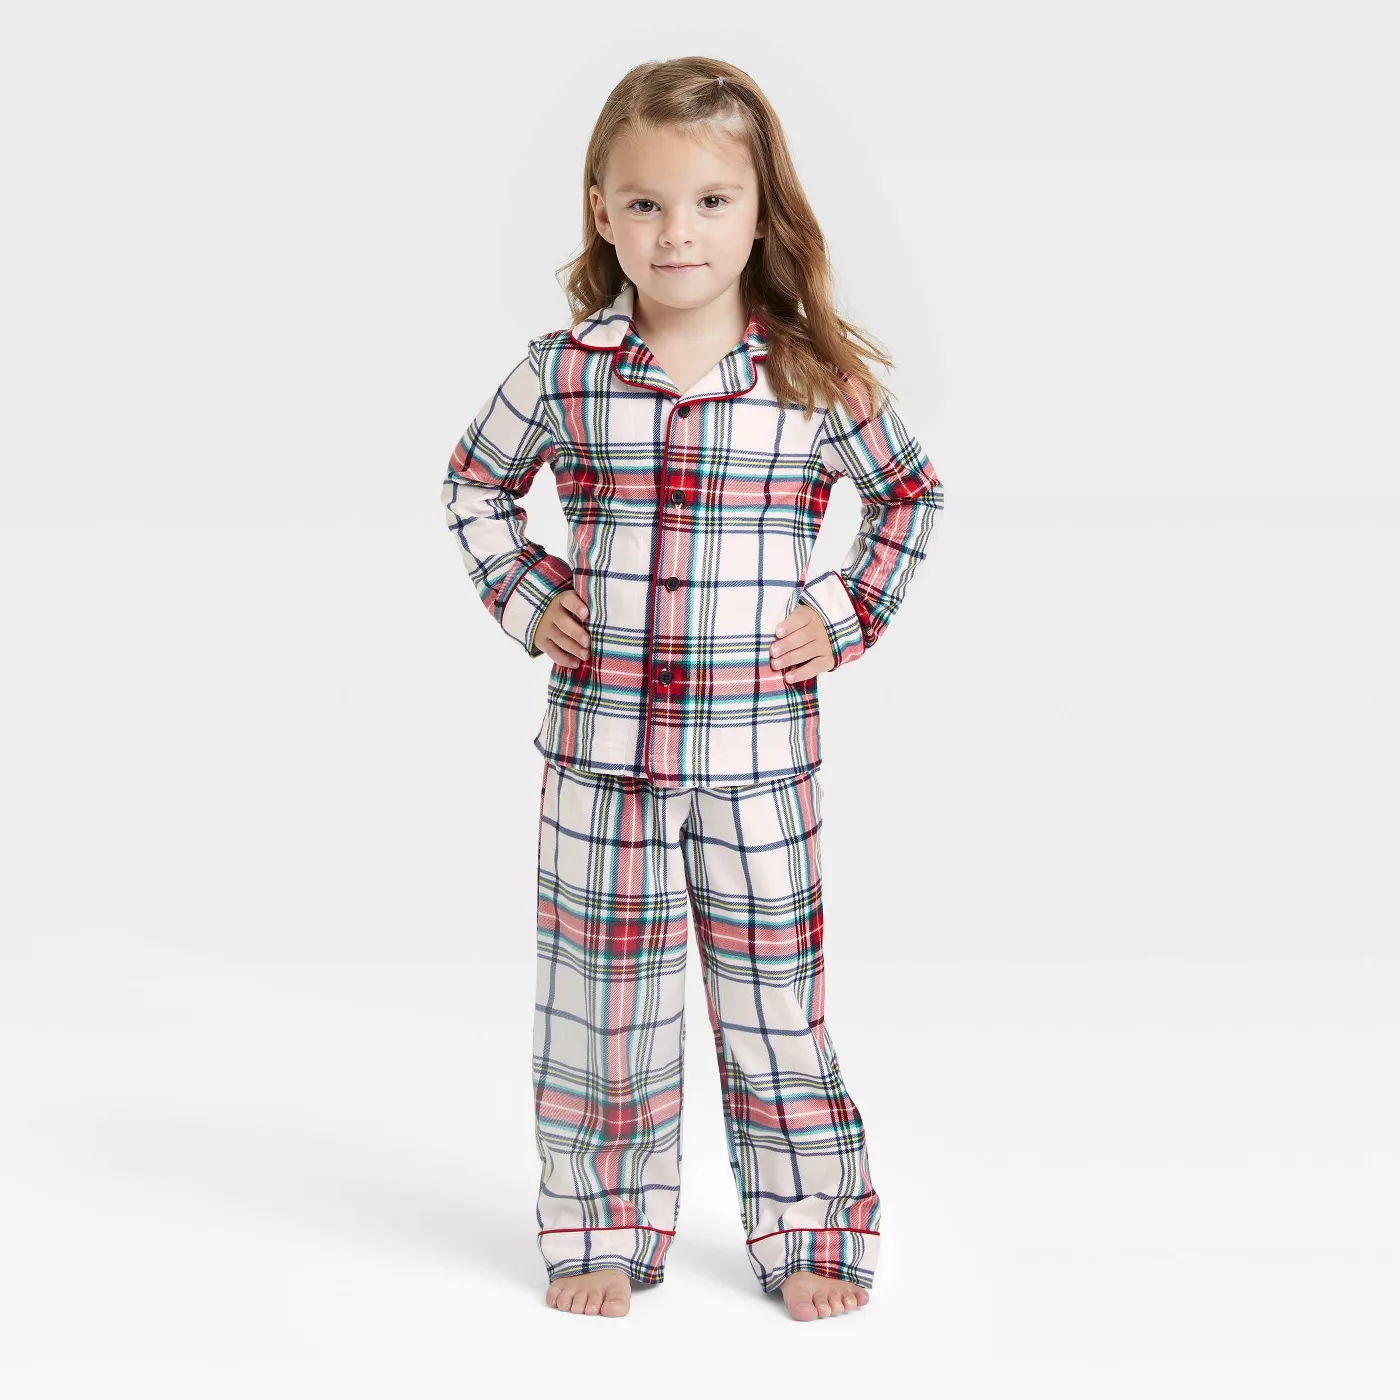 Toddler Holiday Plaid Flannel Matching Family Pajama Set - Wondershop™ White - image 1 of 3